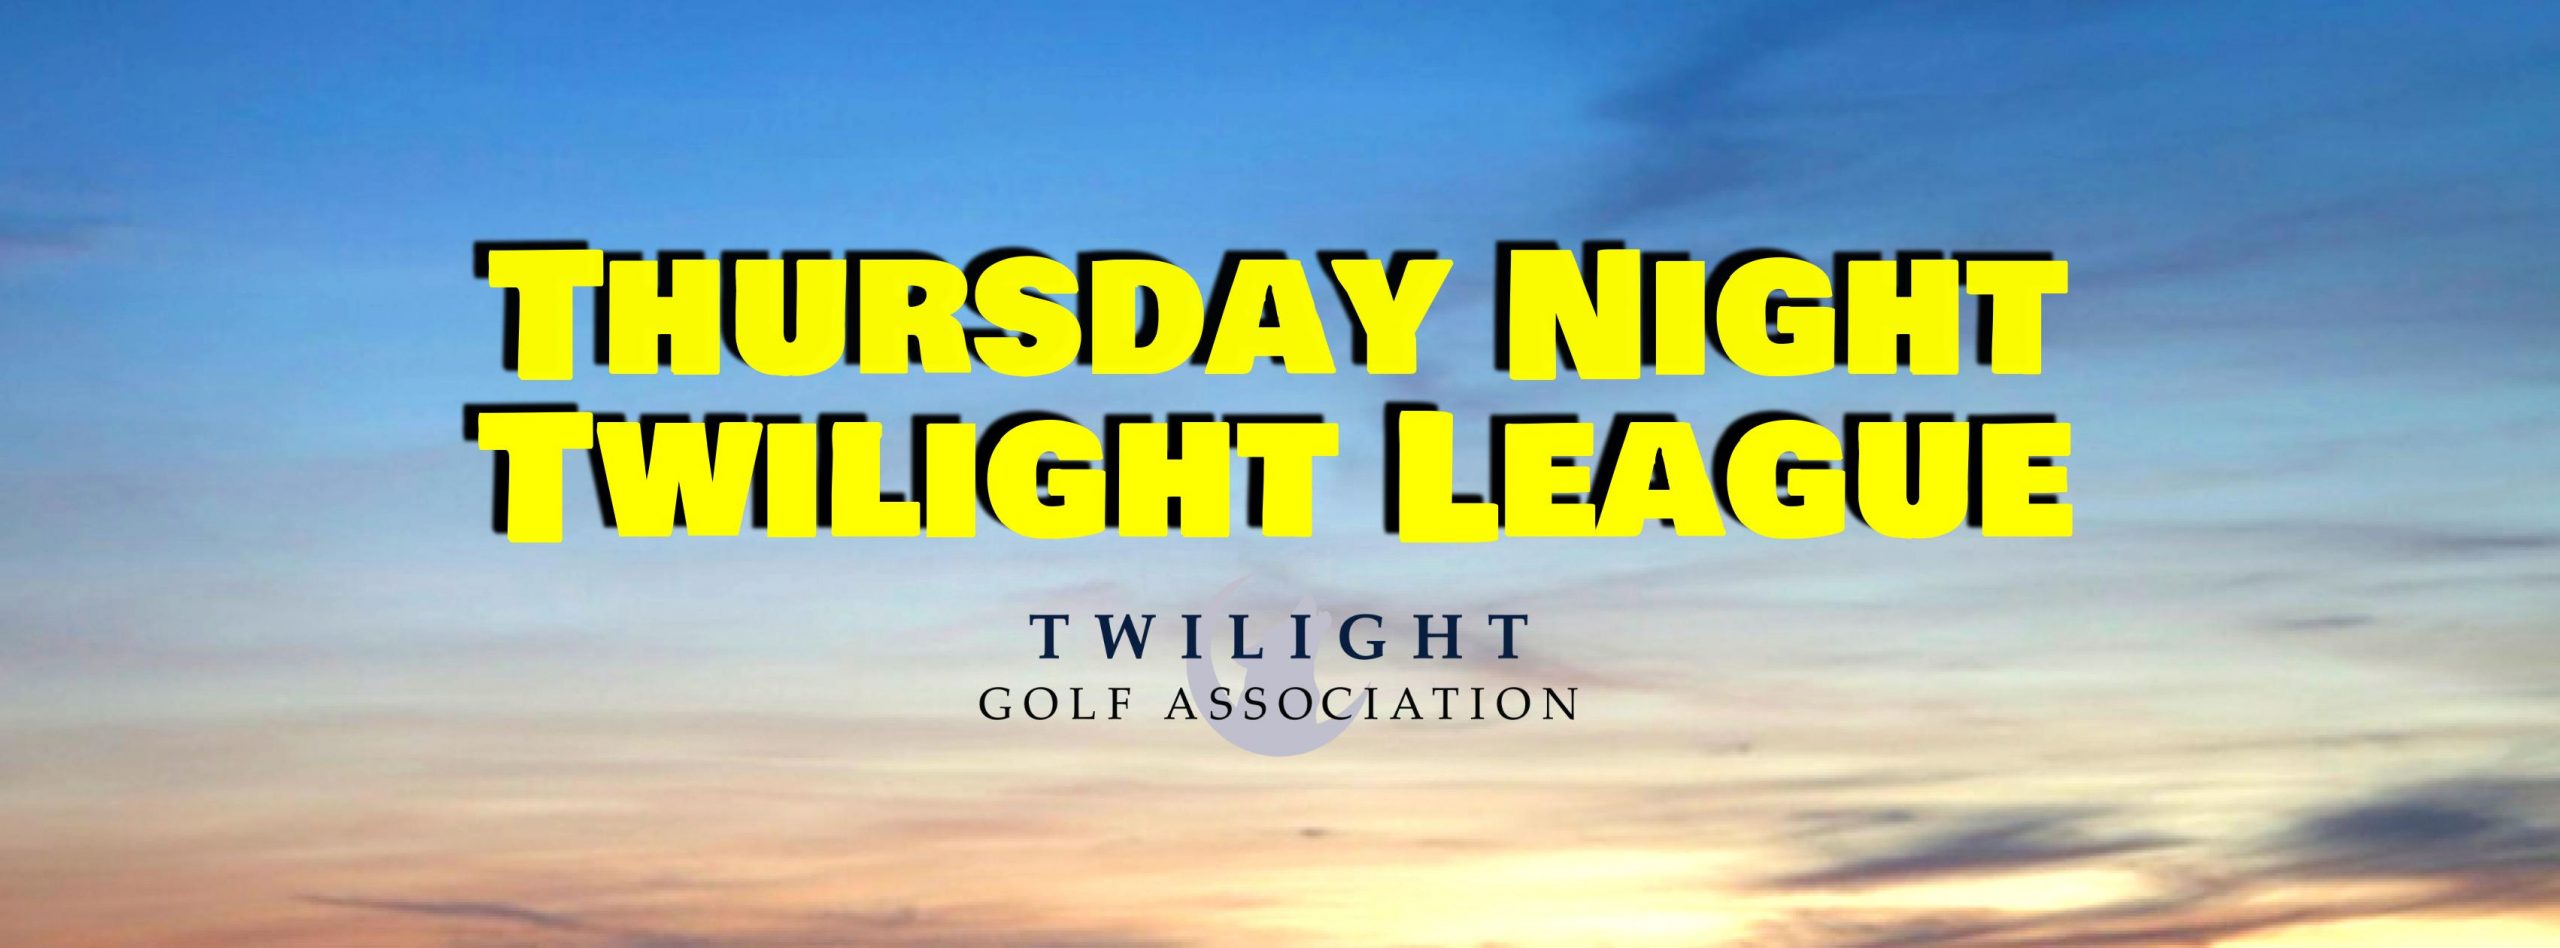 Thursday Night Twilight League at Gambler Ridge Golf Club